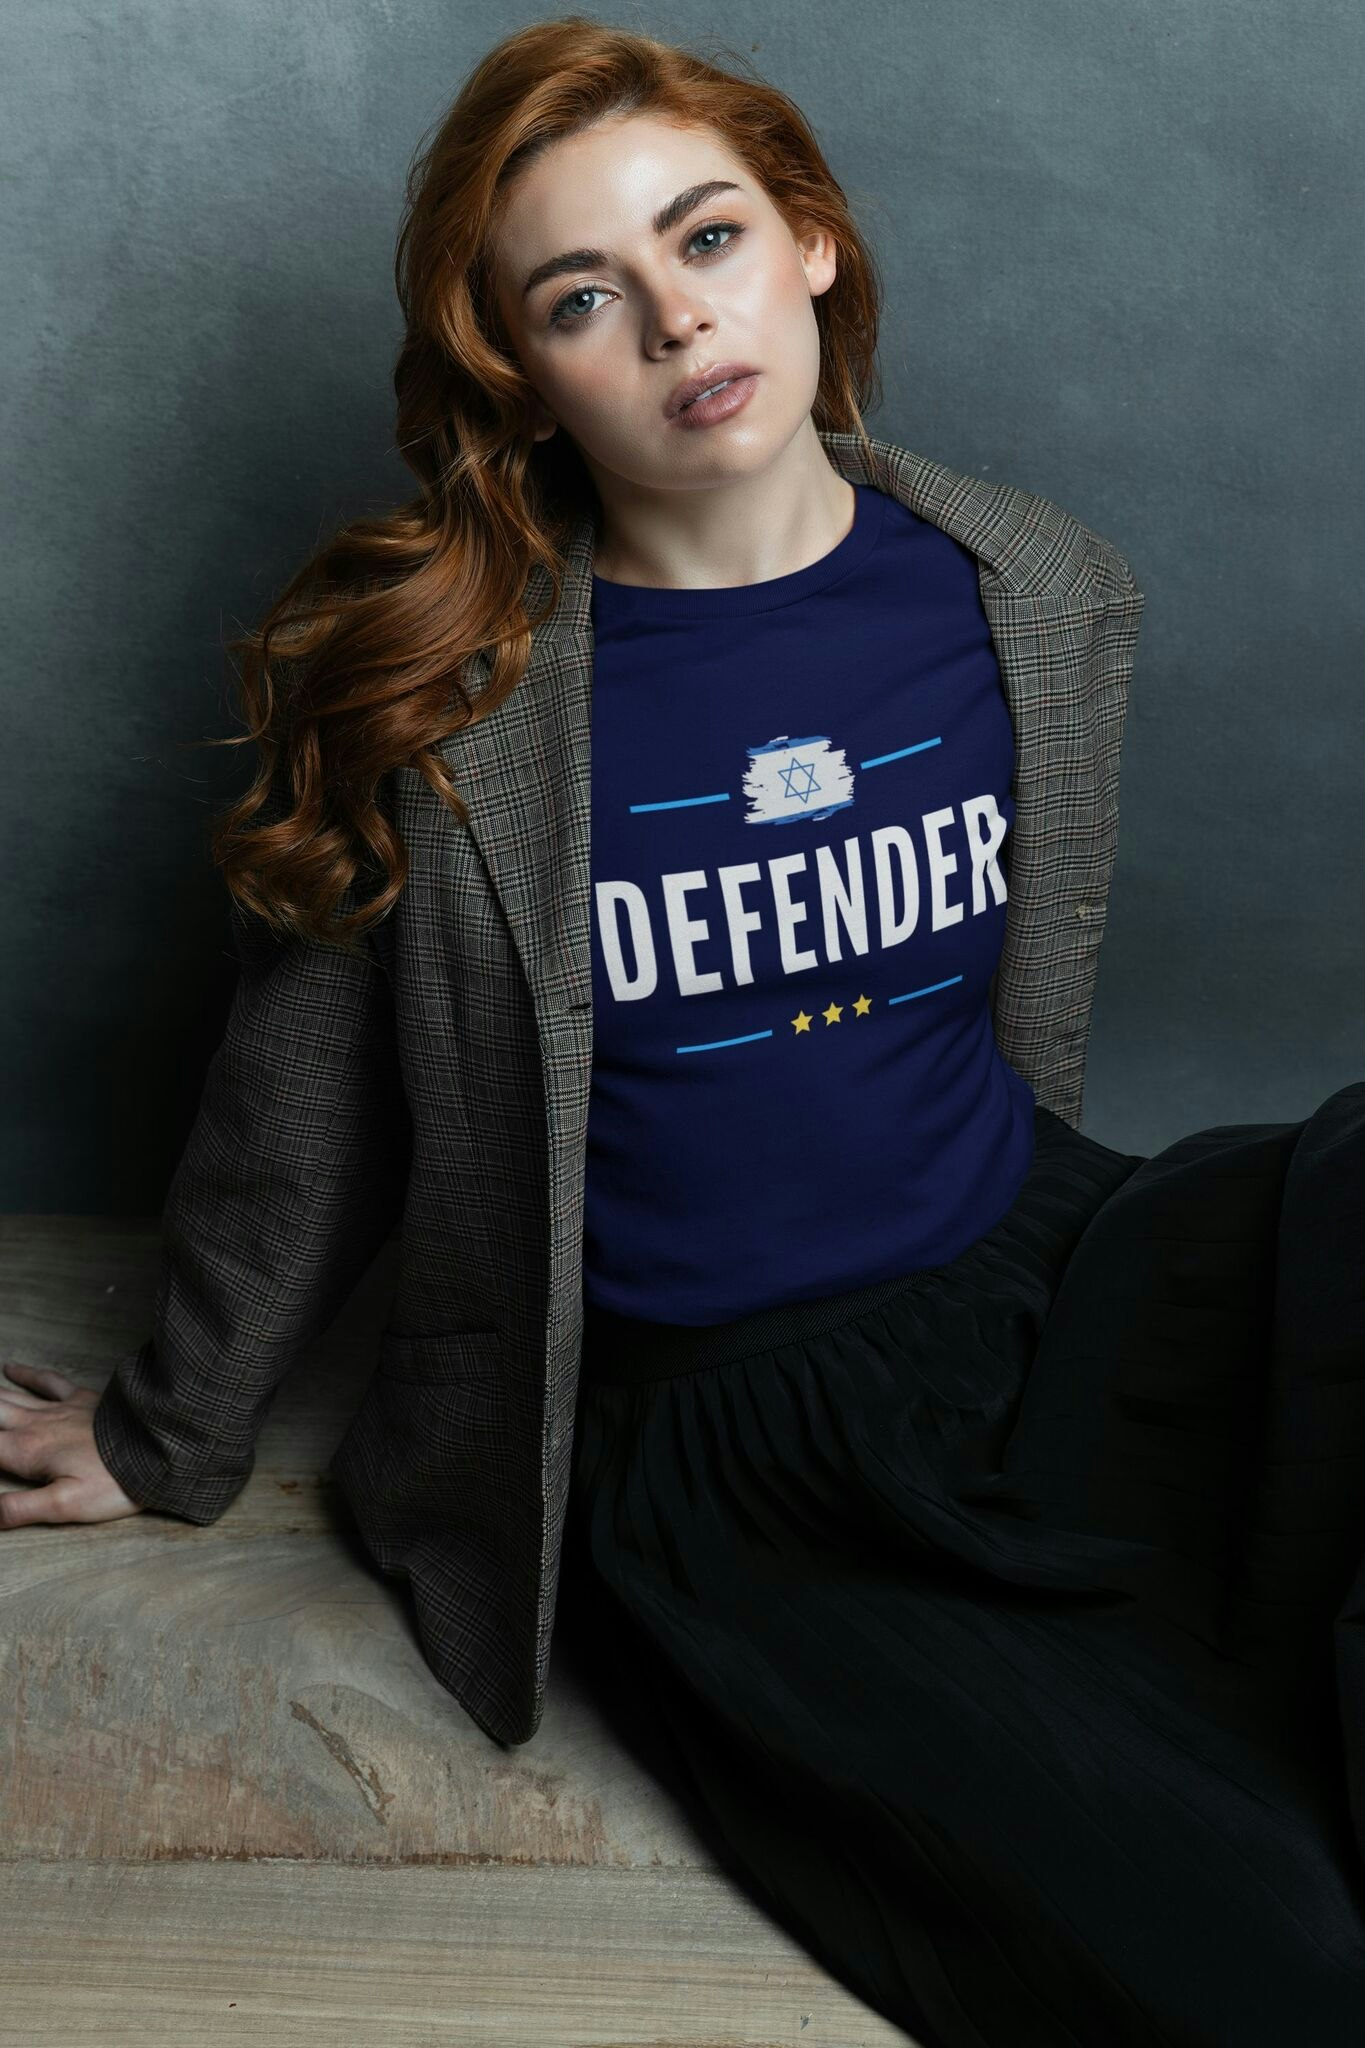 Israel Defender T-Shirt Women